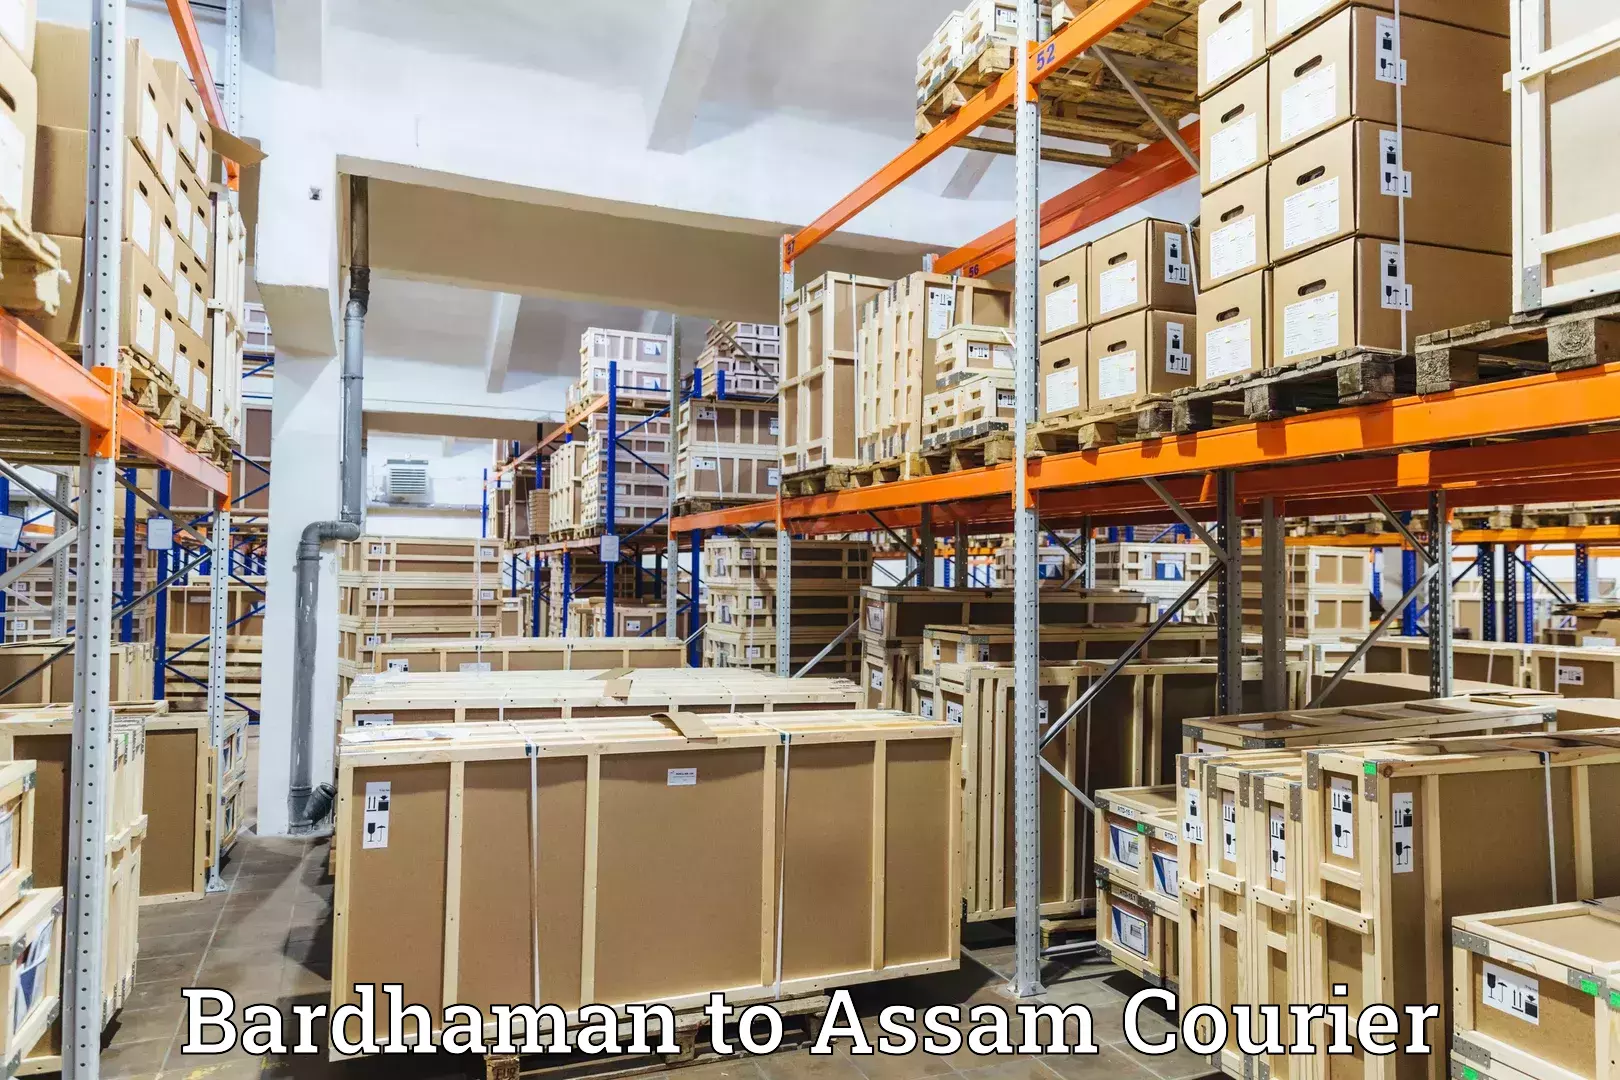 Courier service partnerships Bardhaman to Dima Hasao